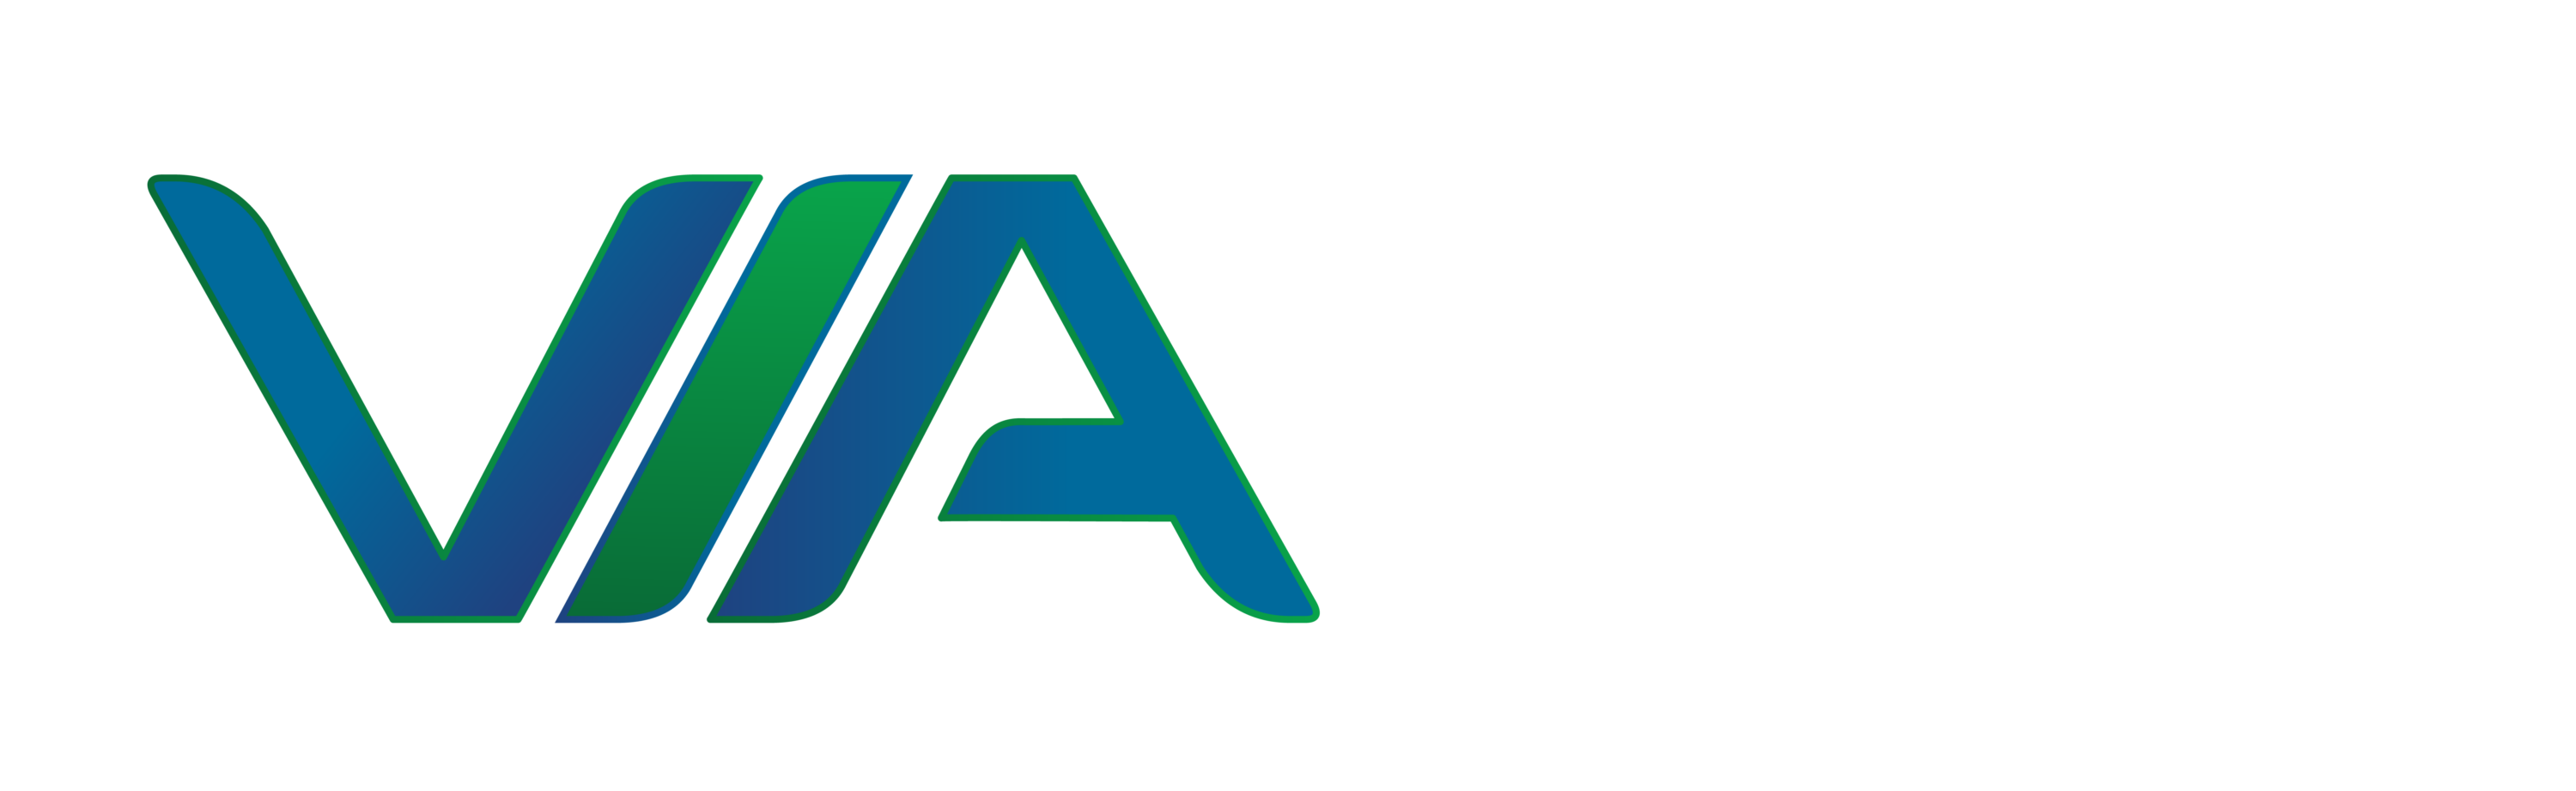 via-energy-solutions